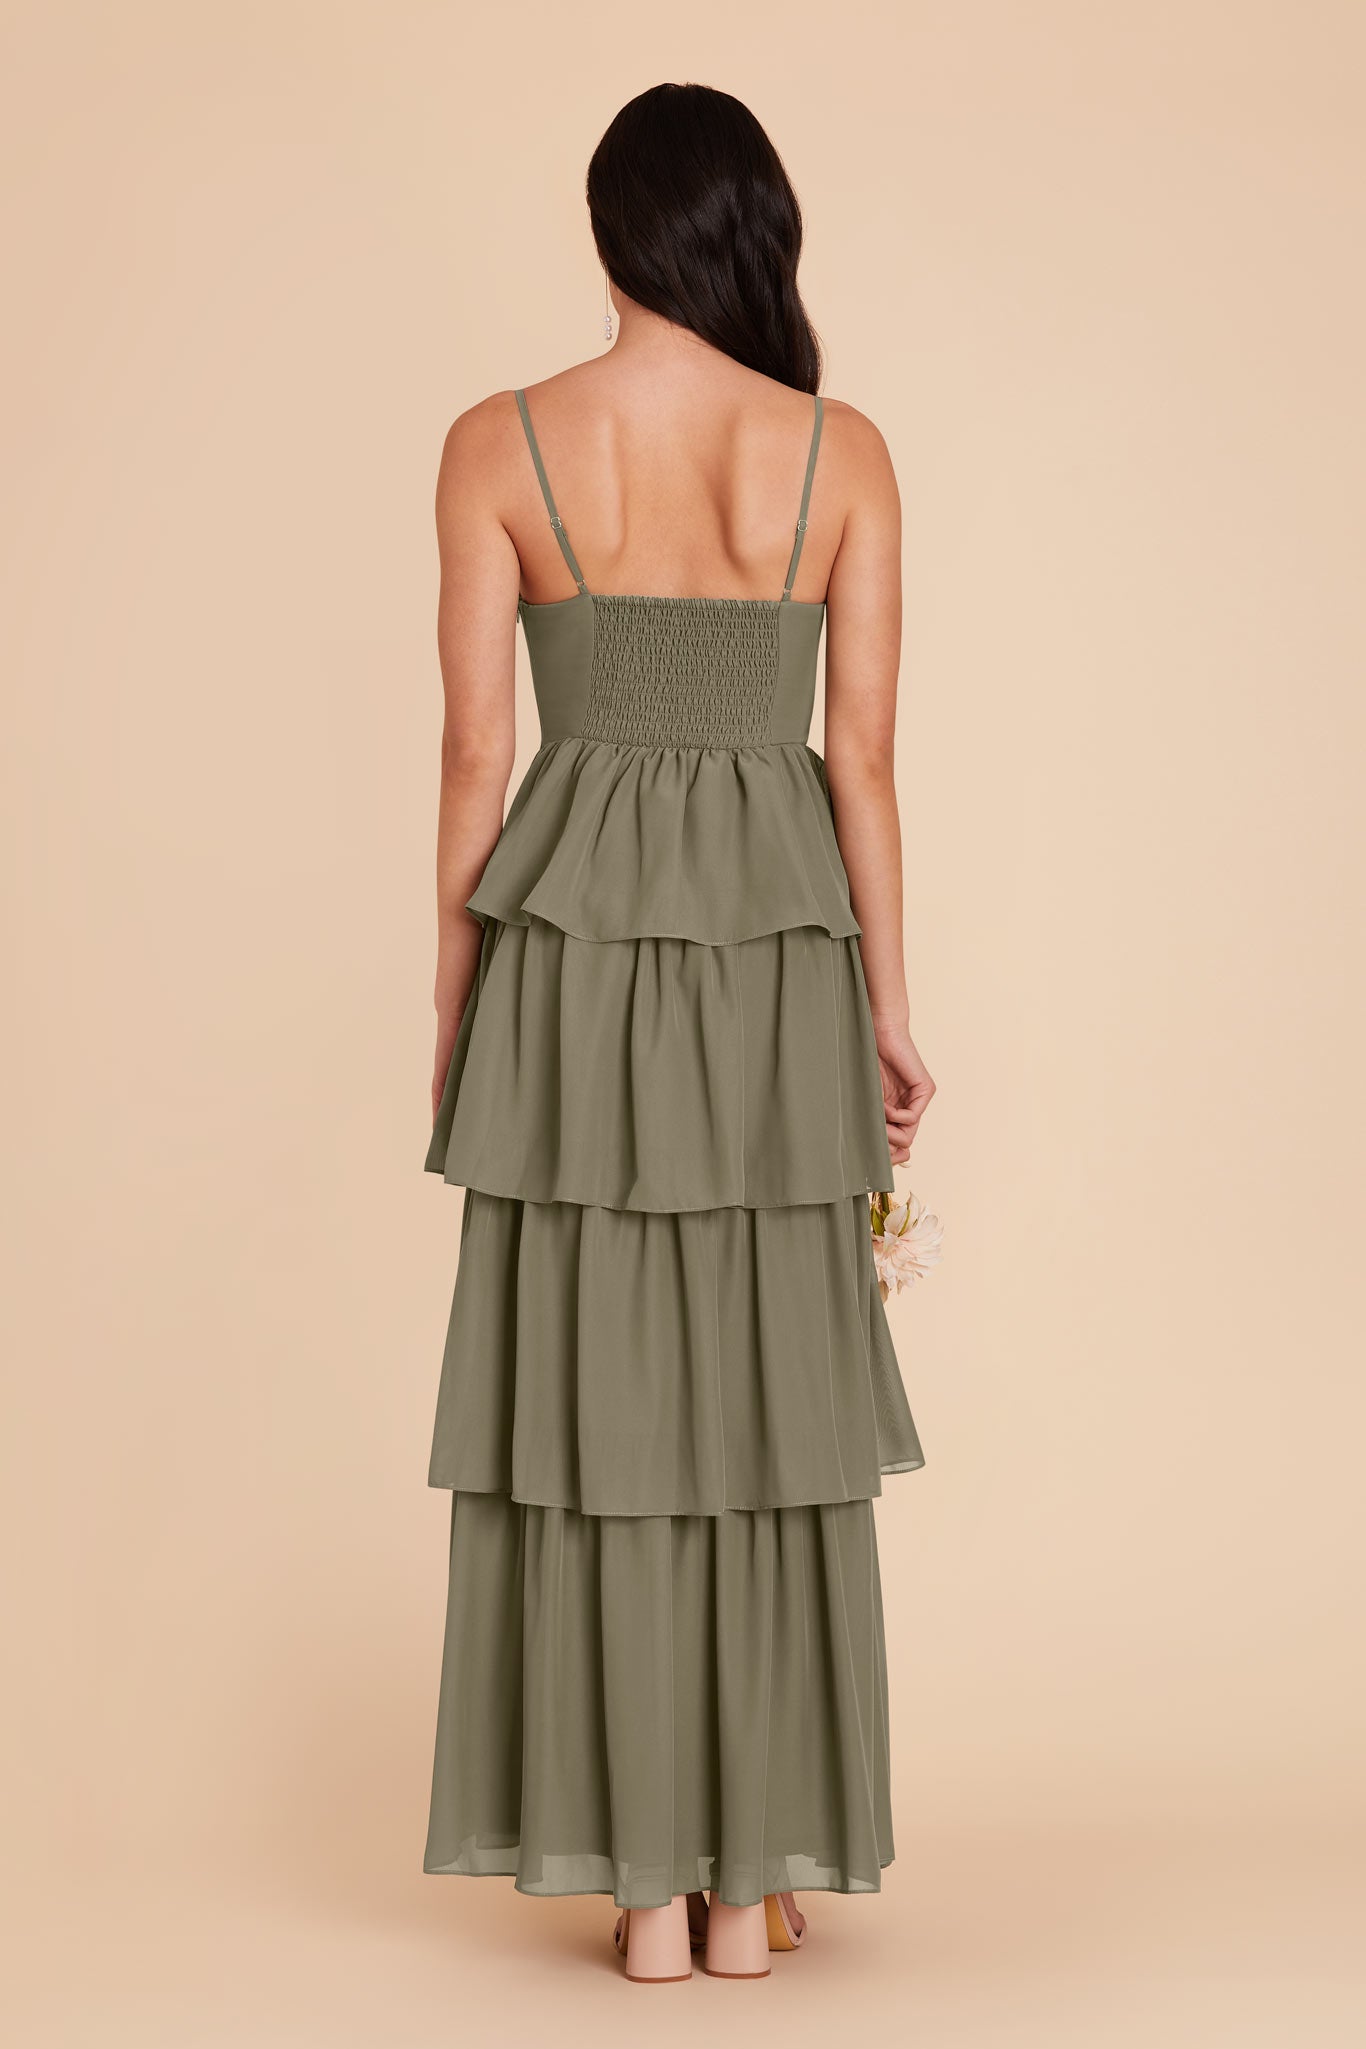 Moss Green Lola Chiffon Dress by Birdy Grey